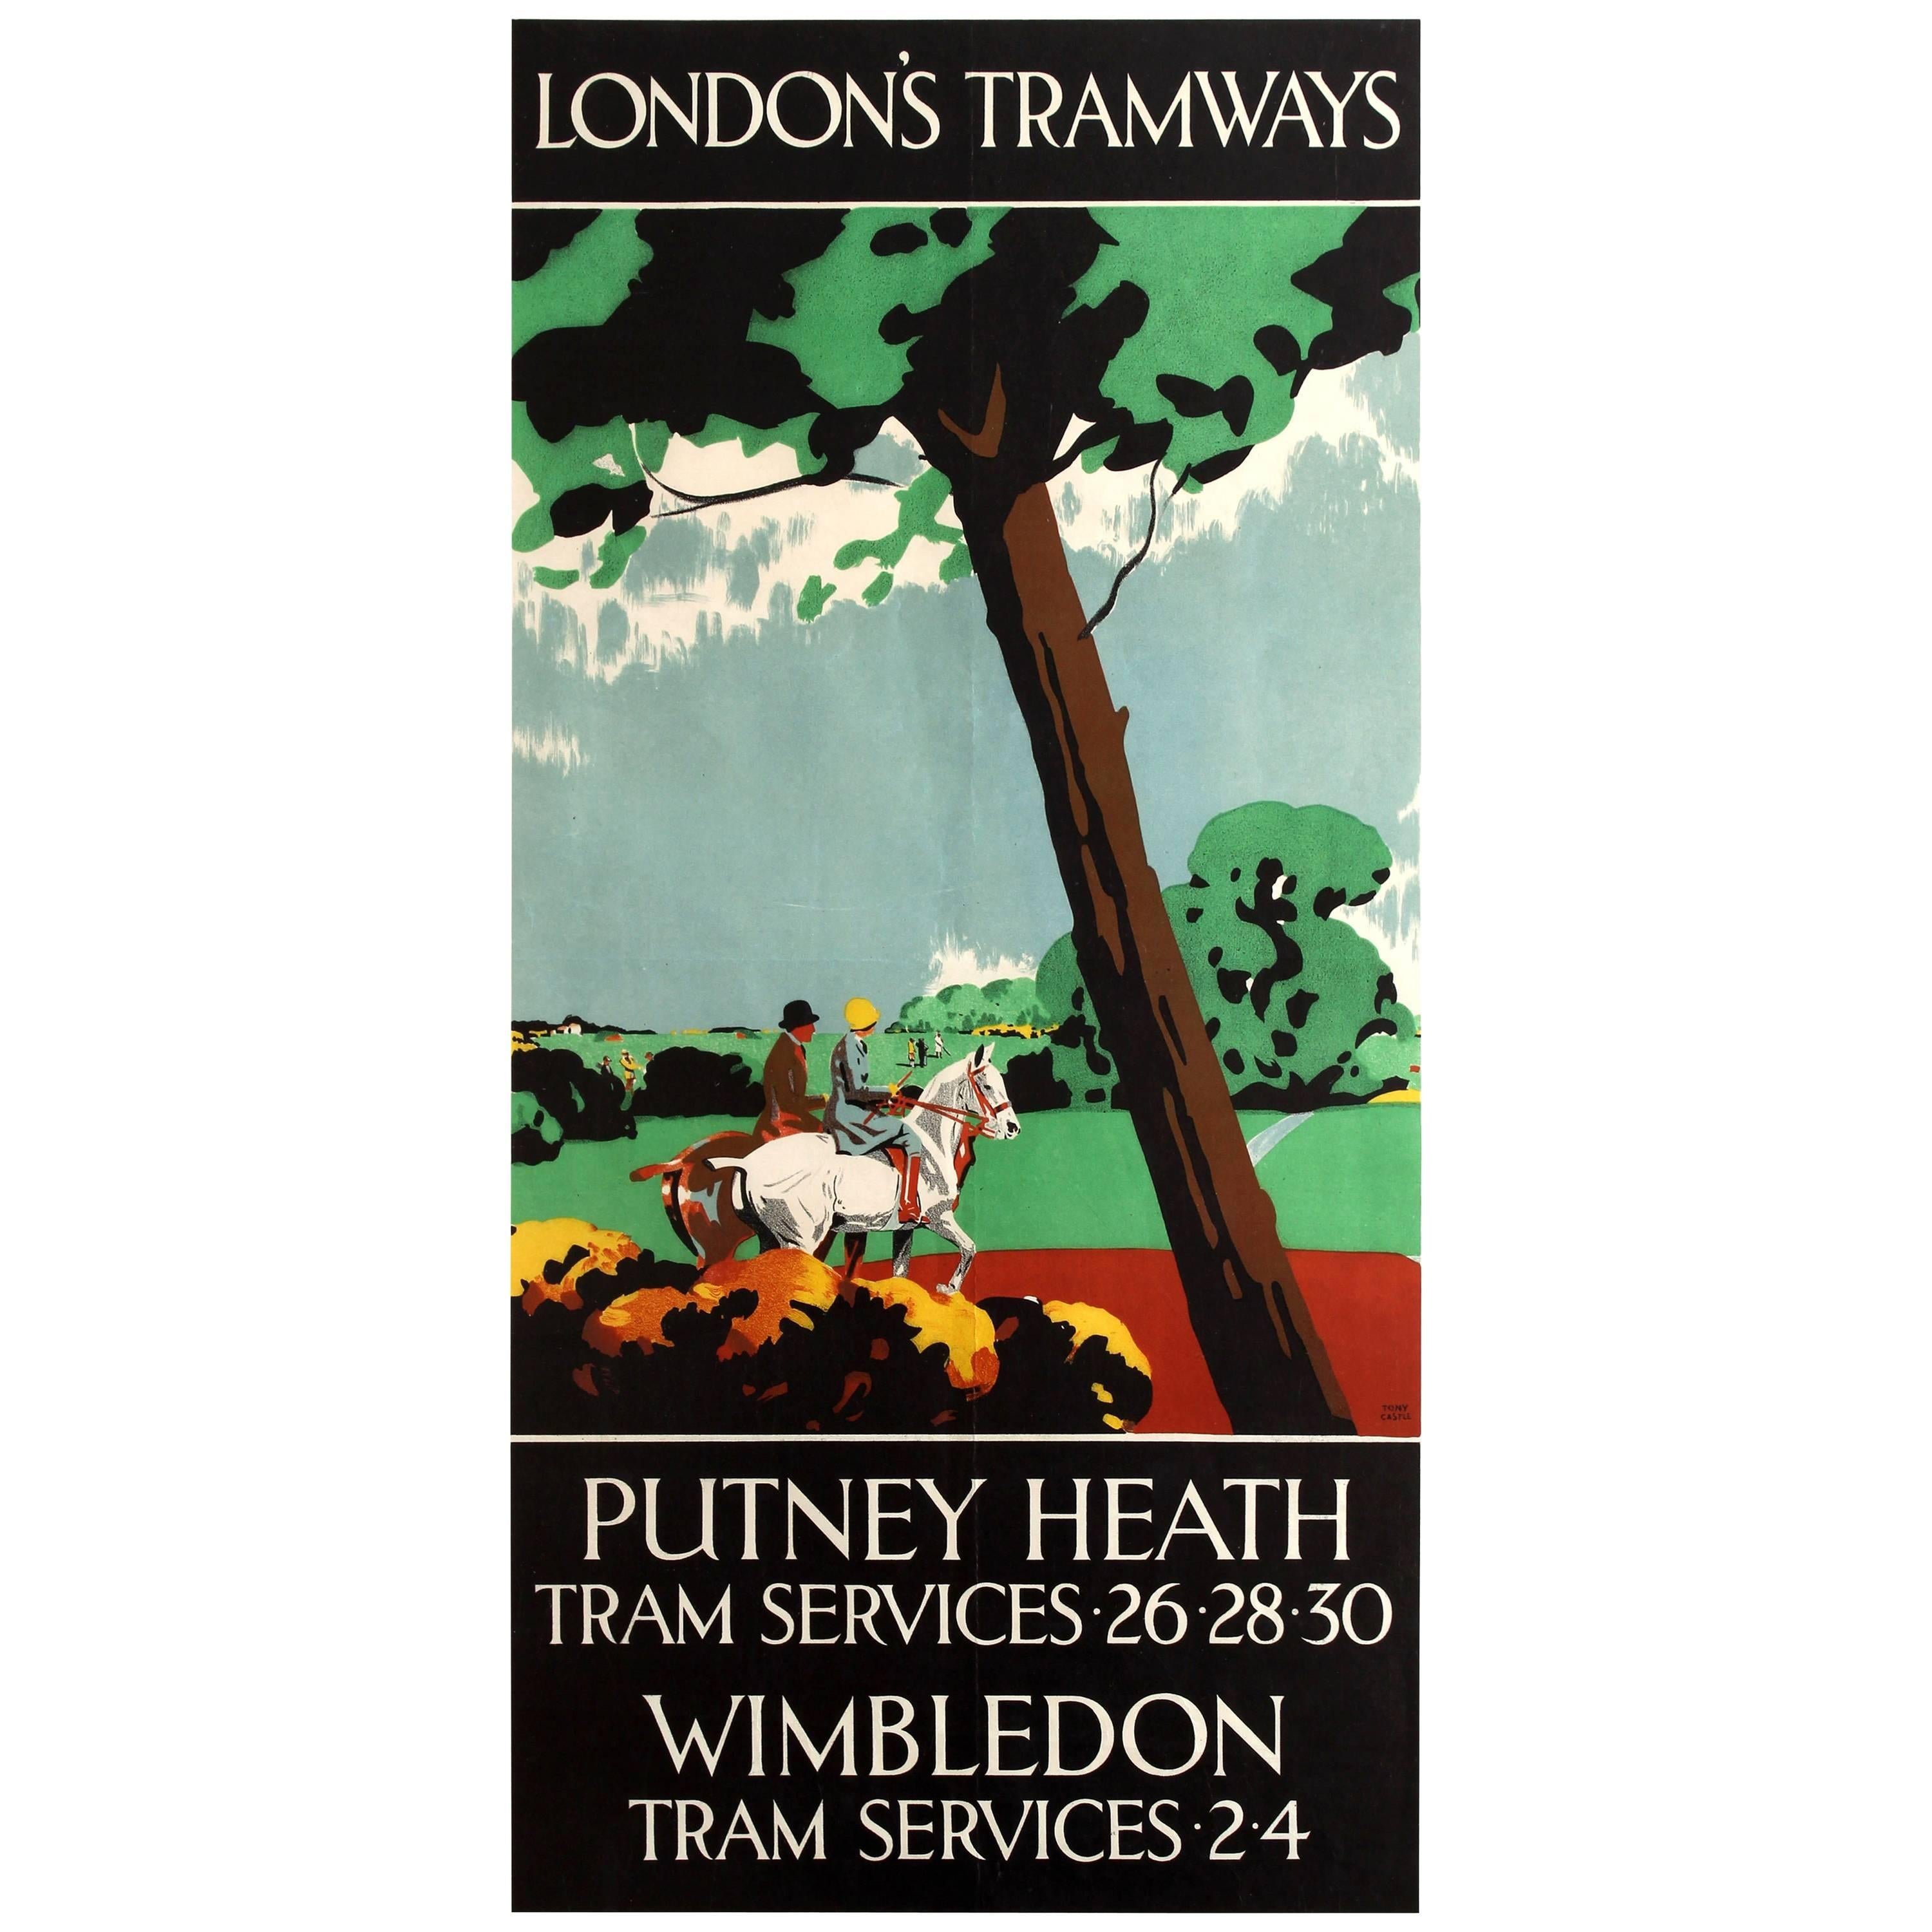 Original Vintage Art Deco London Tramways Poster for Putney Heath and Wimbledon